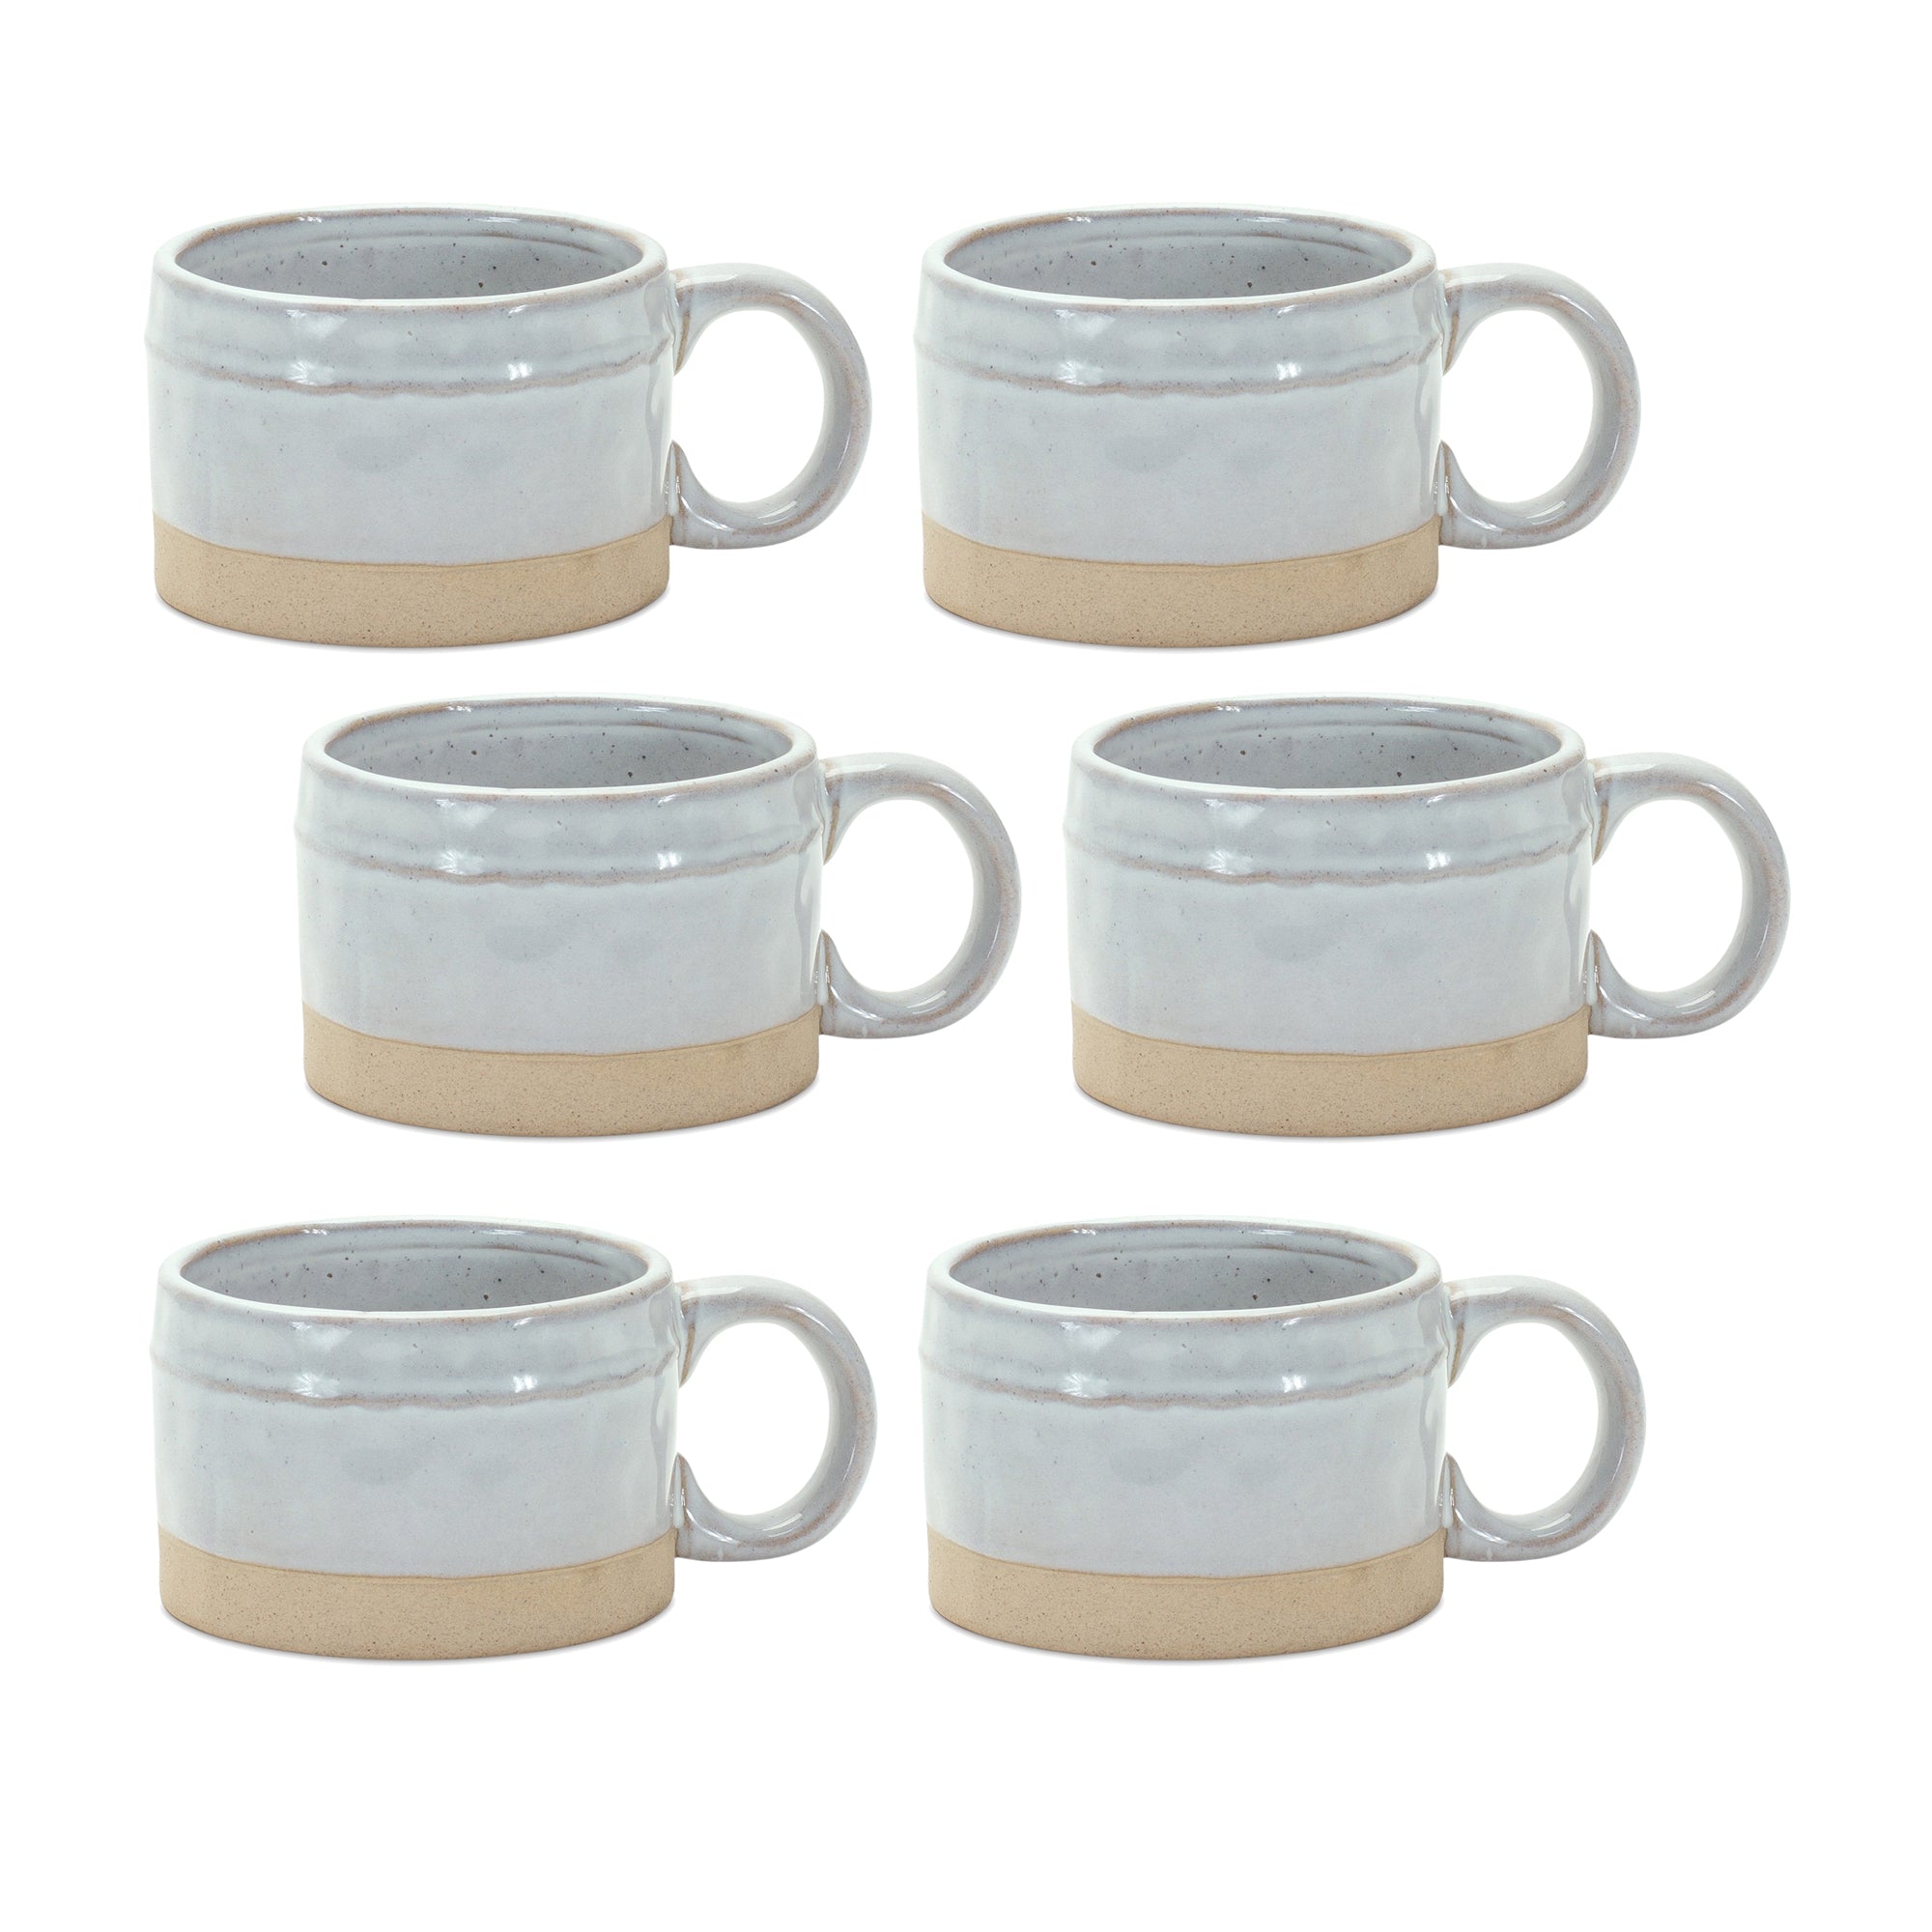 Rustic-Porcelain-Mug-with-Beige-Accent,-Set-of-6-Mugs